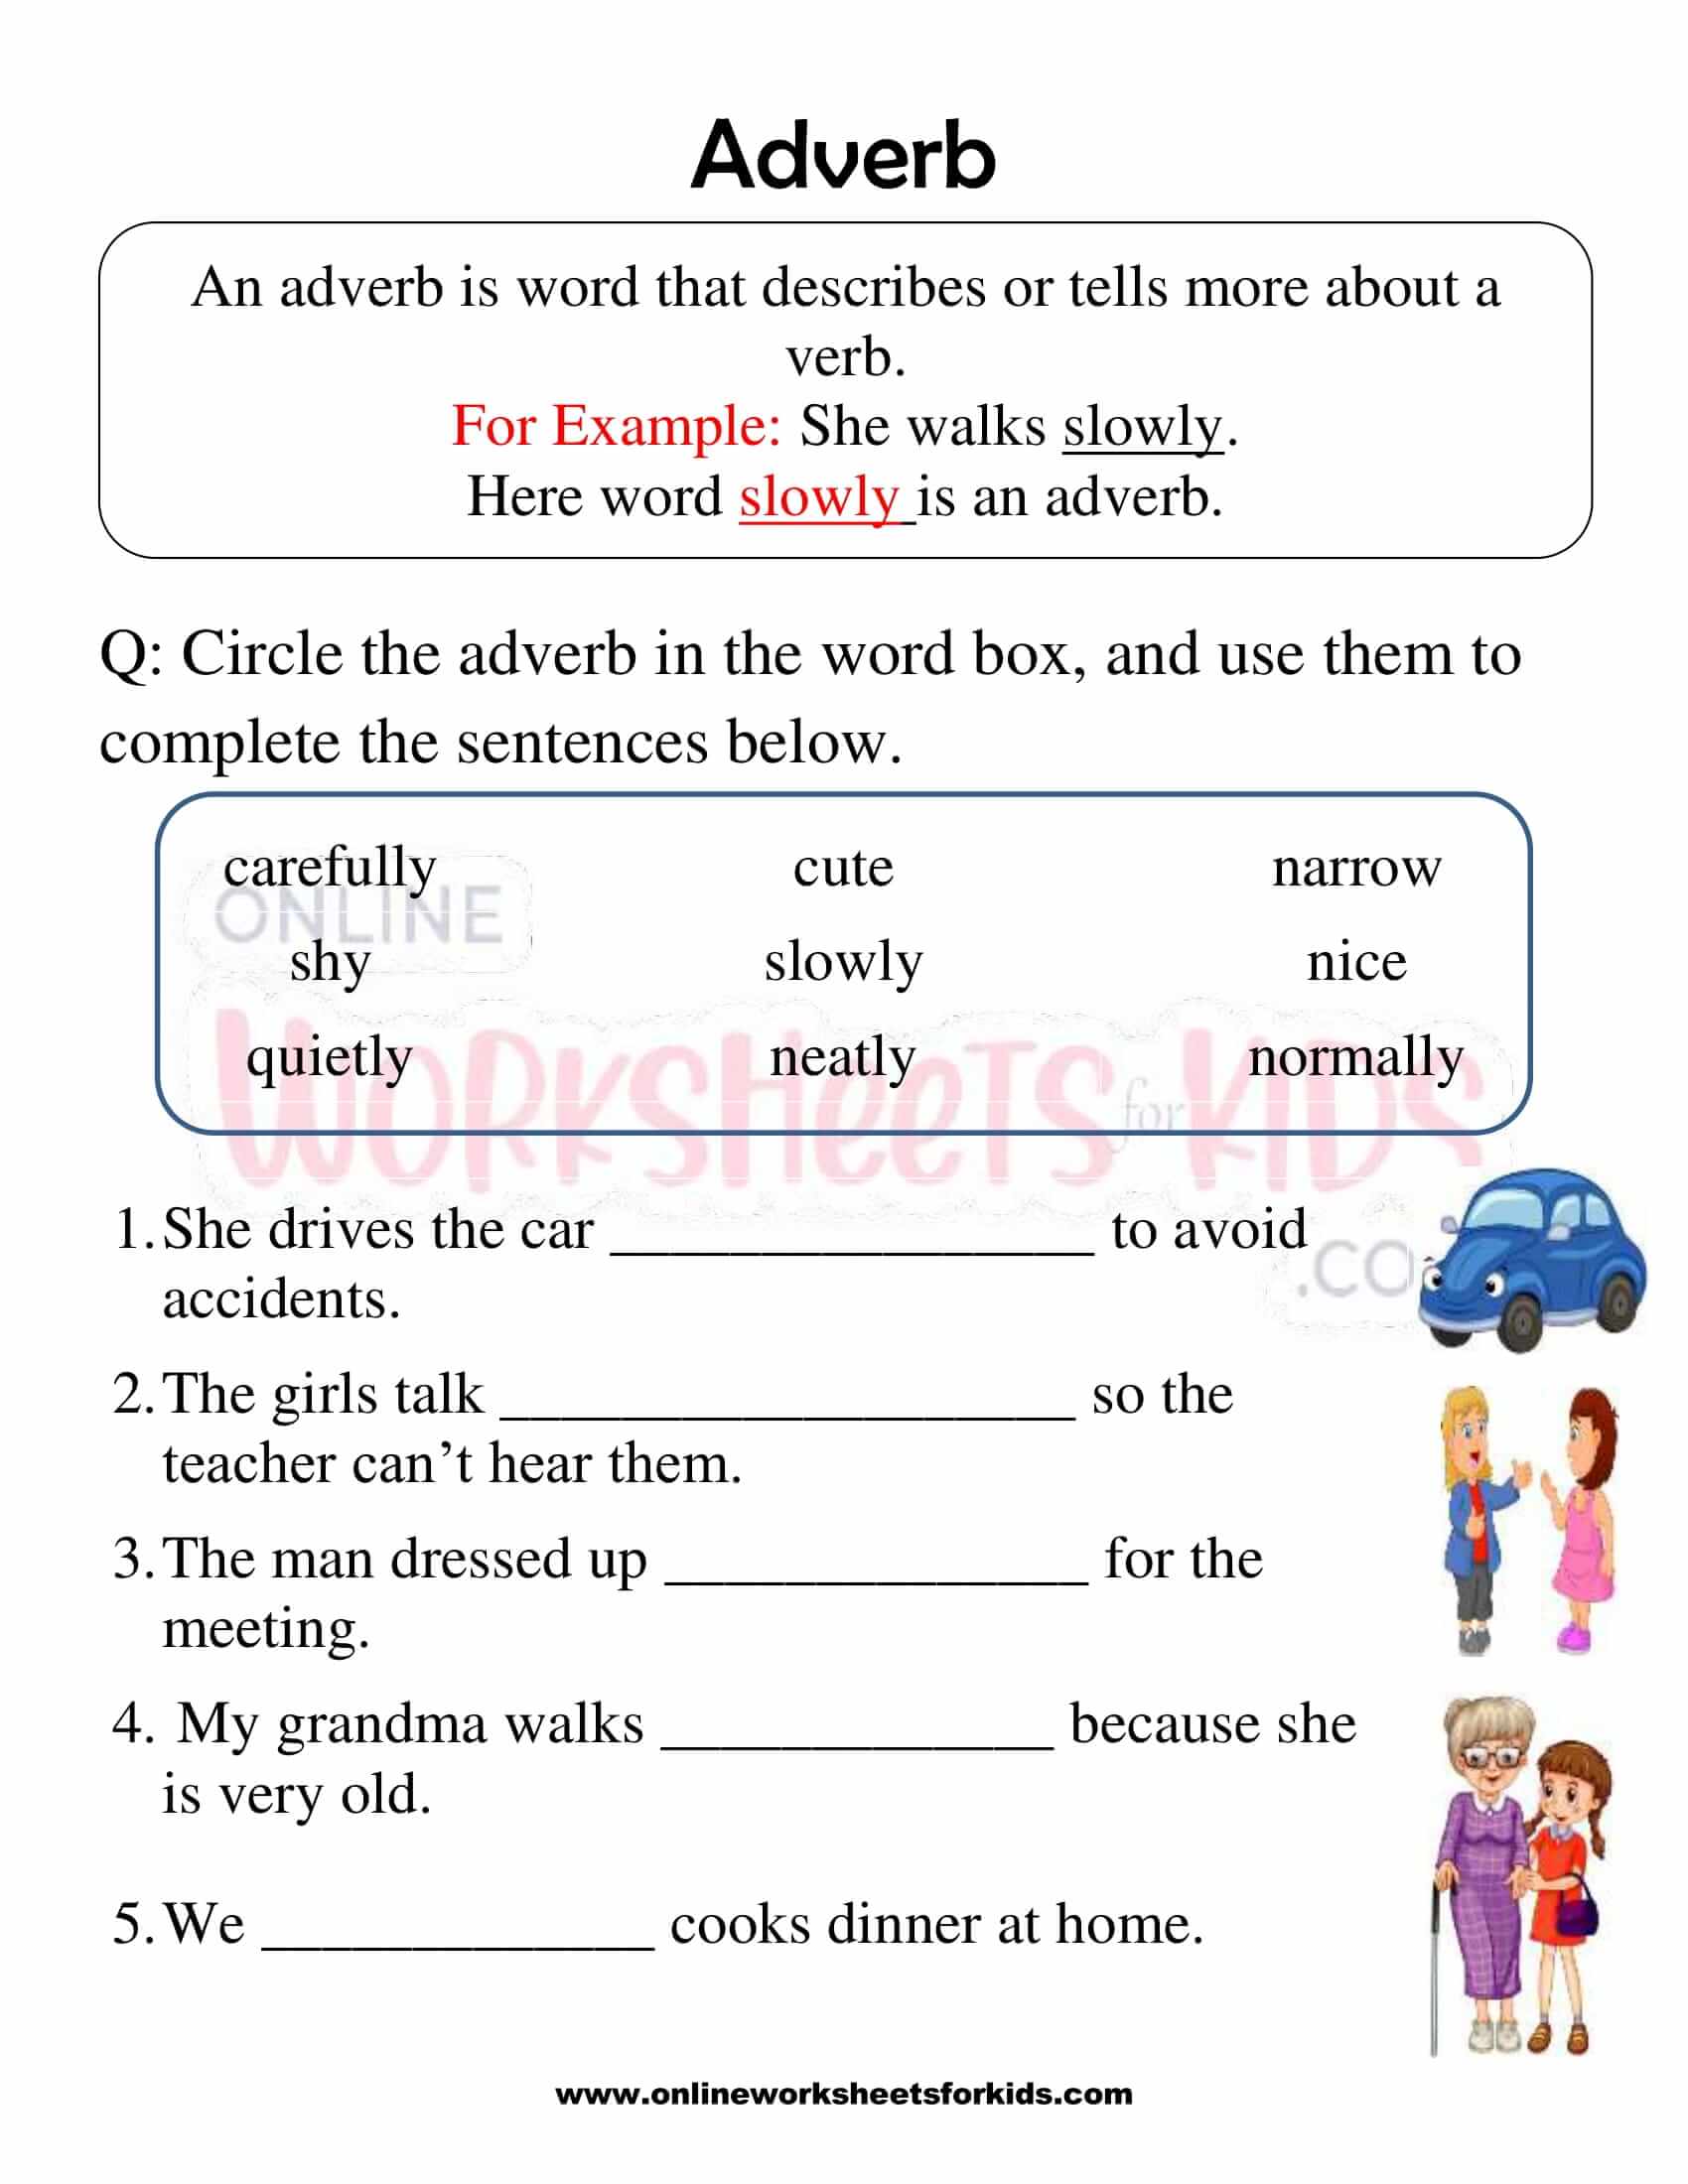 20-relative-adverbs-worksheet-4th-grade-desalas-template